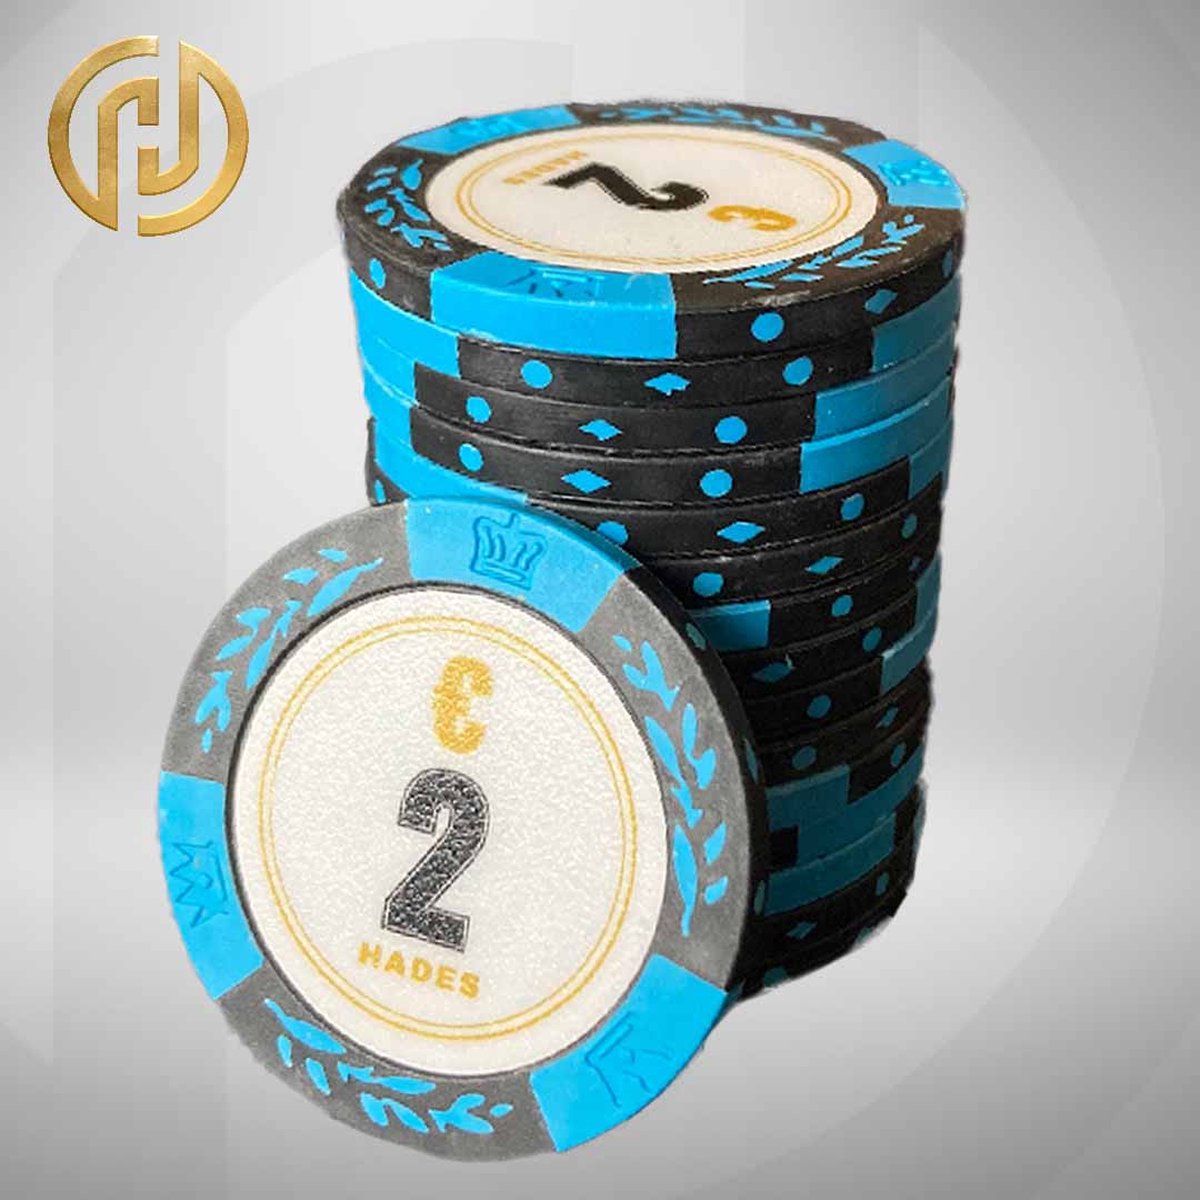 Mec Hades Cashgame Classic Poker Chips €2 blauw (25 stuks) pokerchips pokerfiches poker fiches clay chips pokerspel pokerset poker set